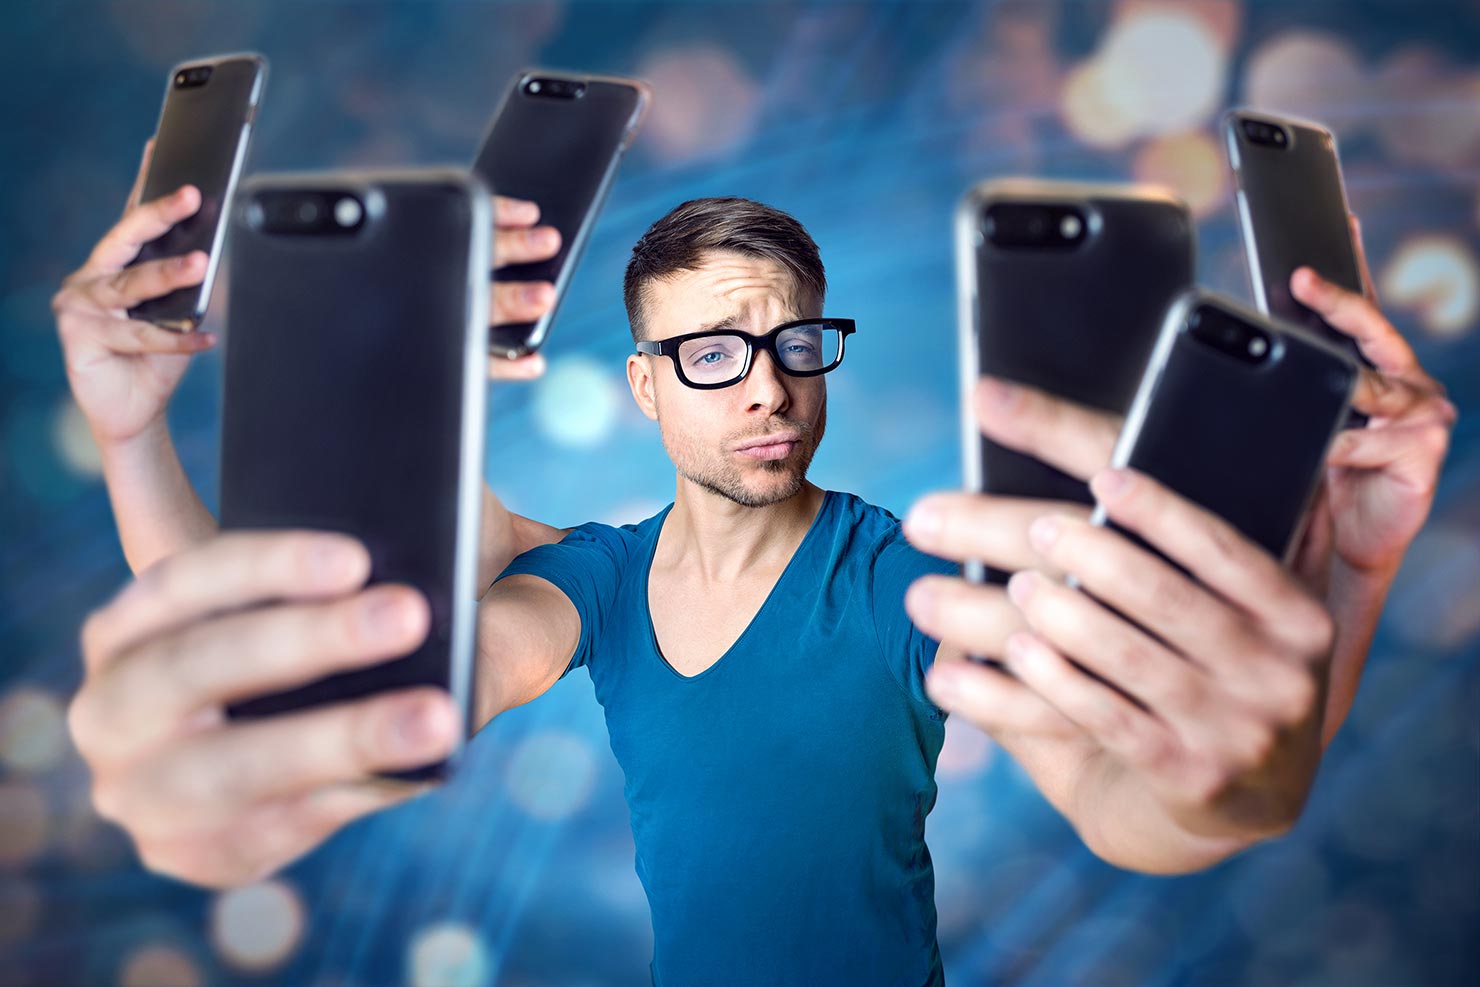 mobile phone camera influencer influwanker selfies selfie taking obsessed narcissism